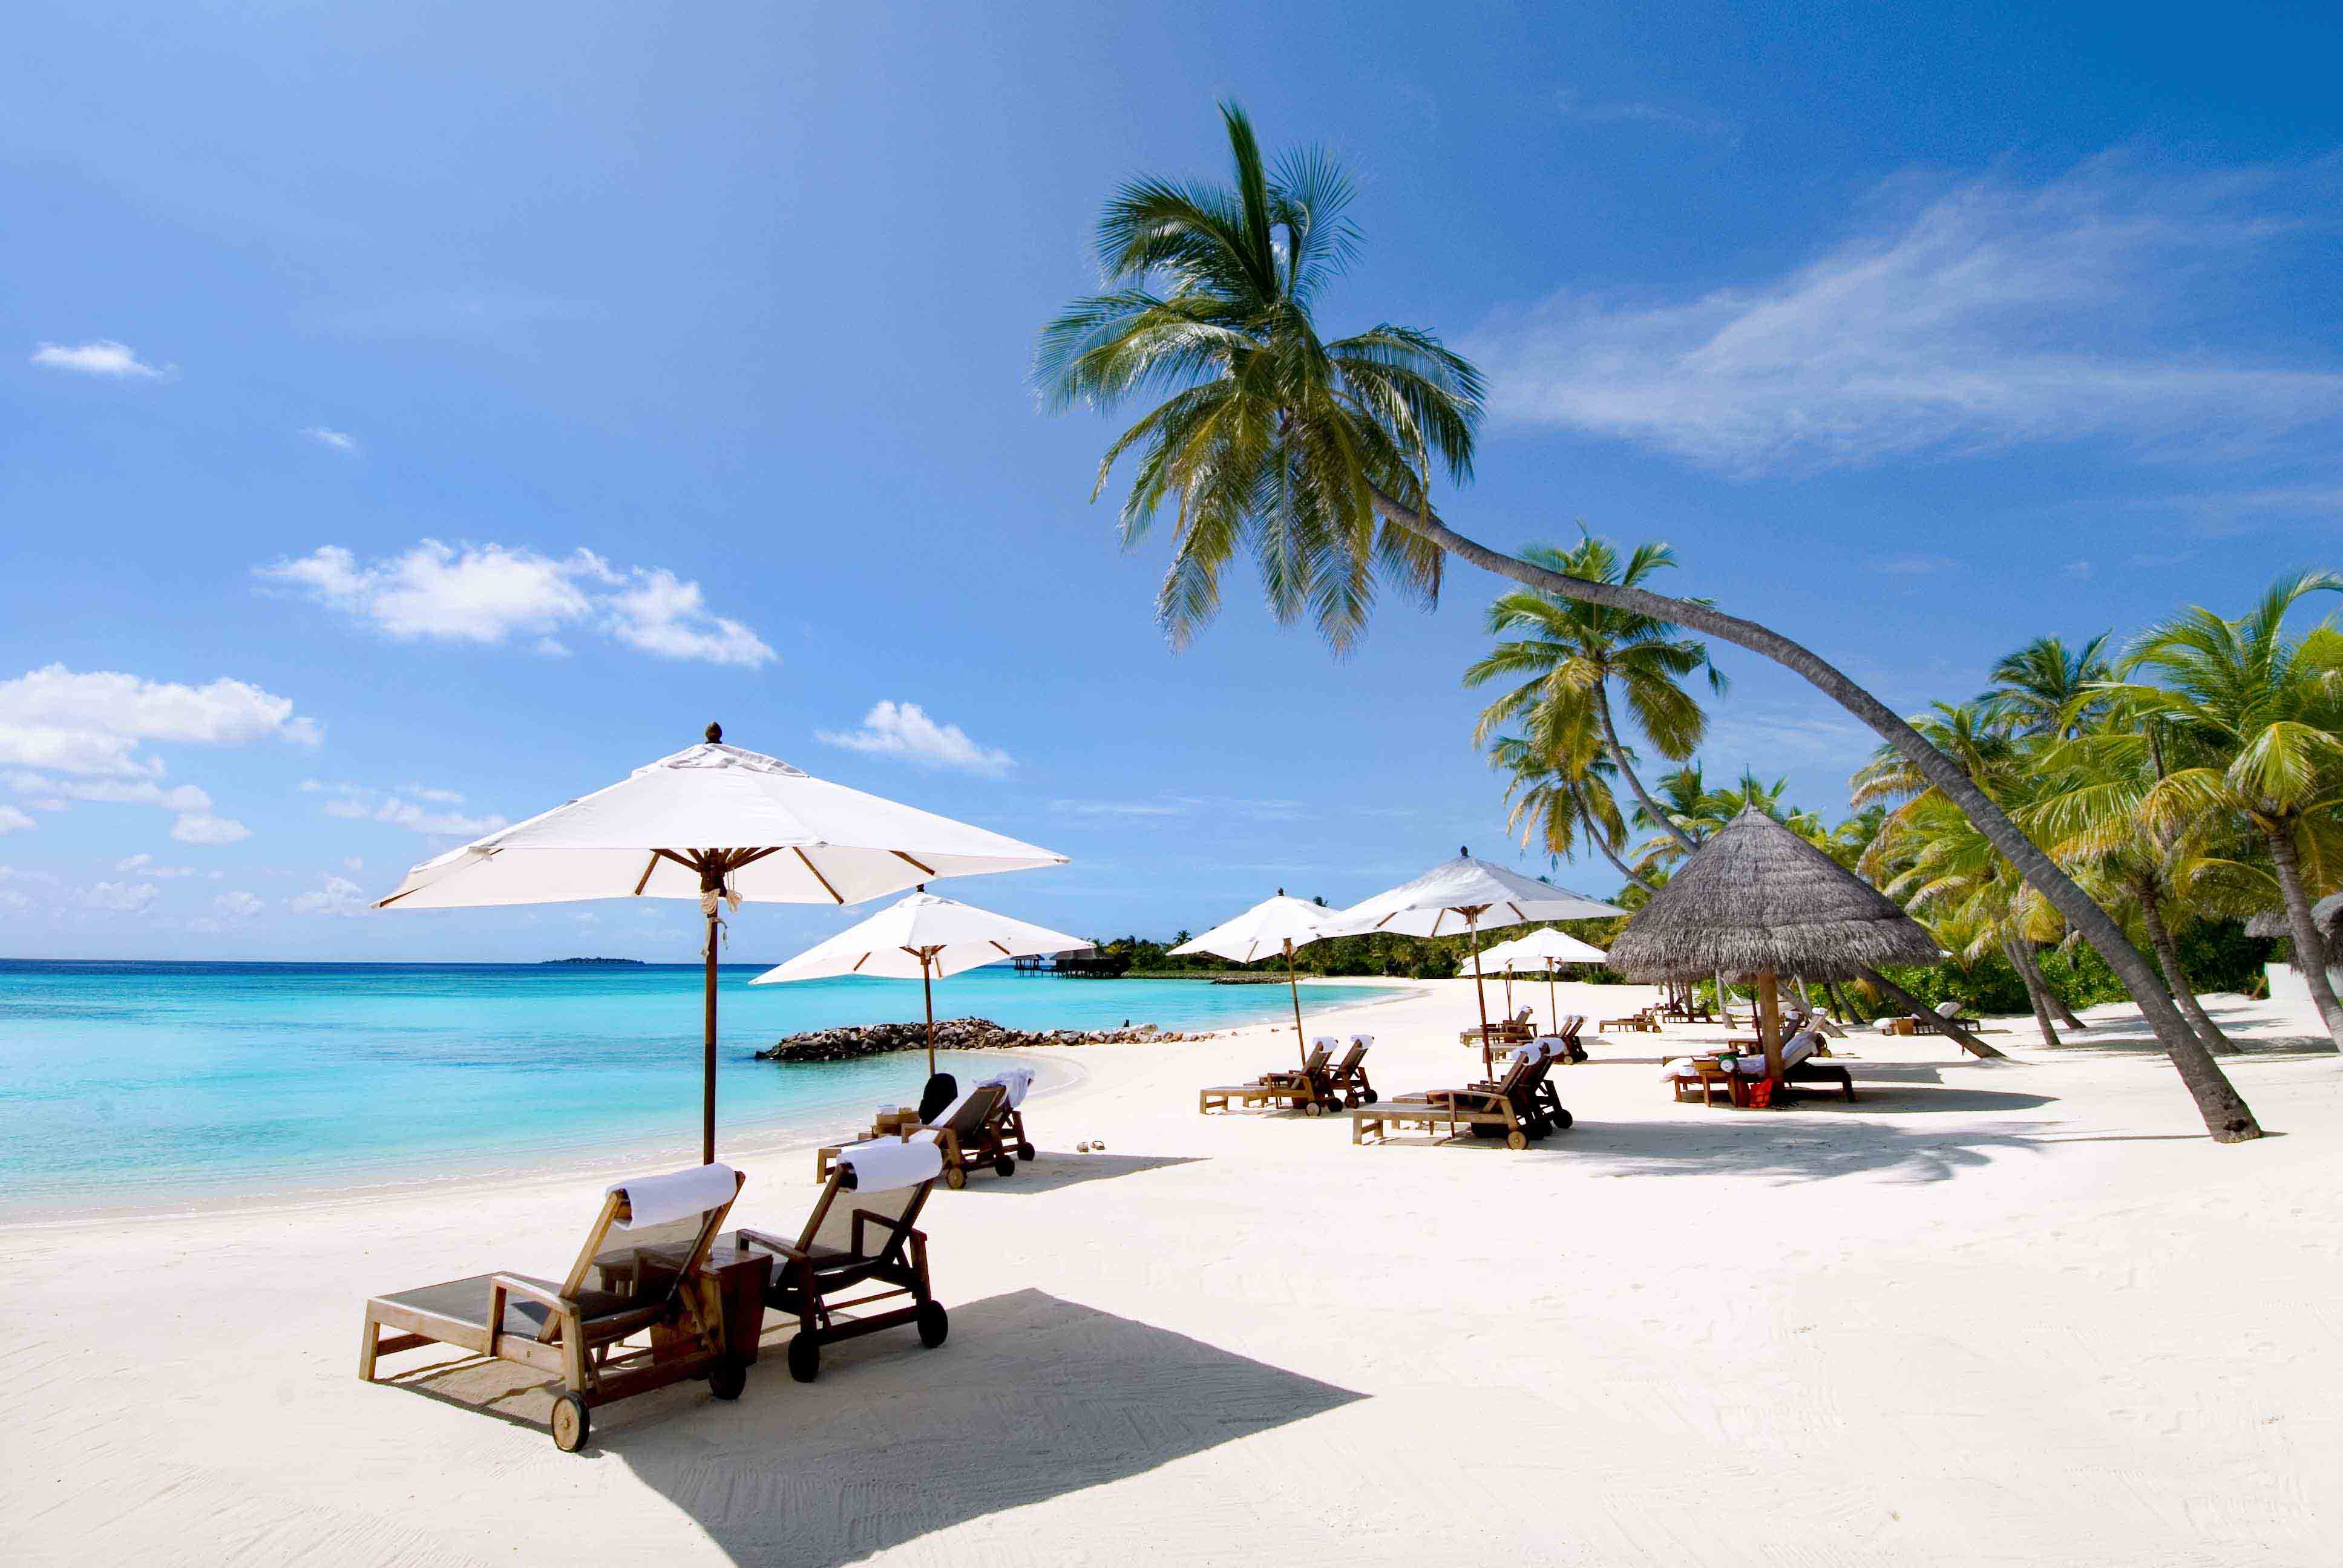 Nha Trang Beach Break 3 days - Vietnam travel agency - Travel agency ...